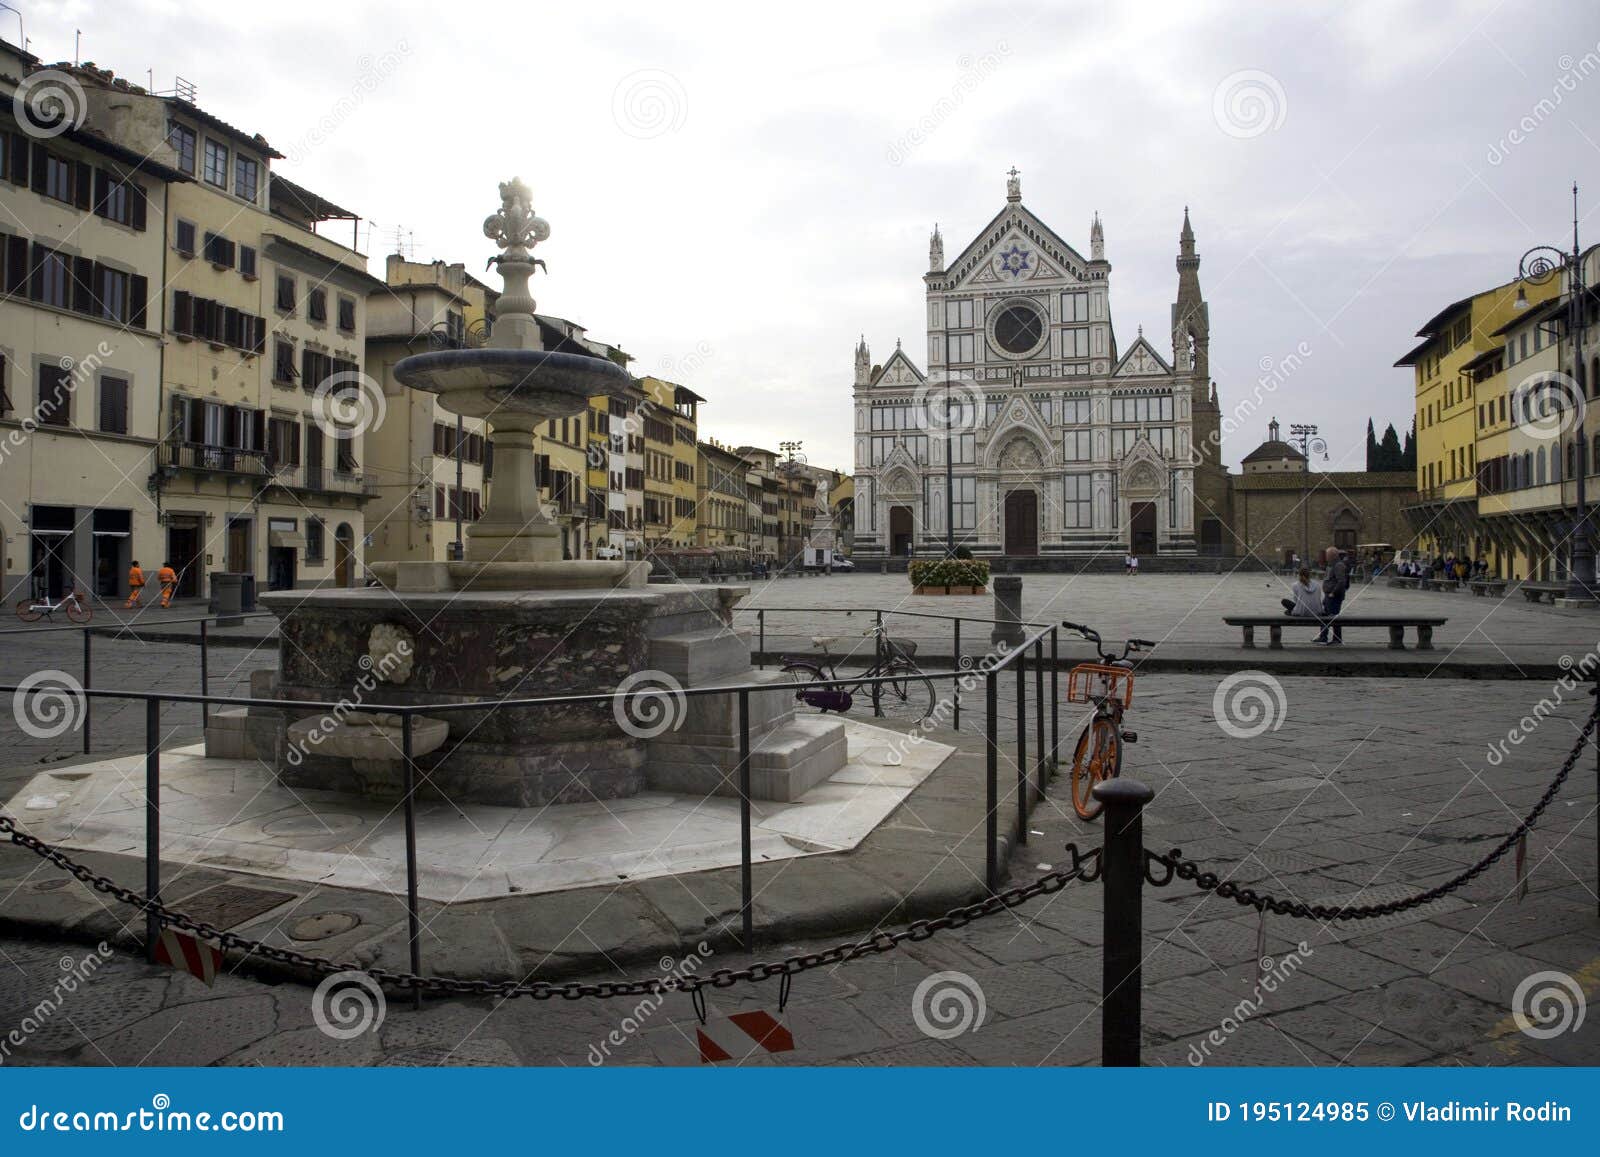 florence basilica of santa croce, the gothic catholicism architect arnolfo di cambio, the church square